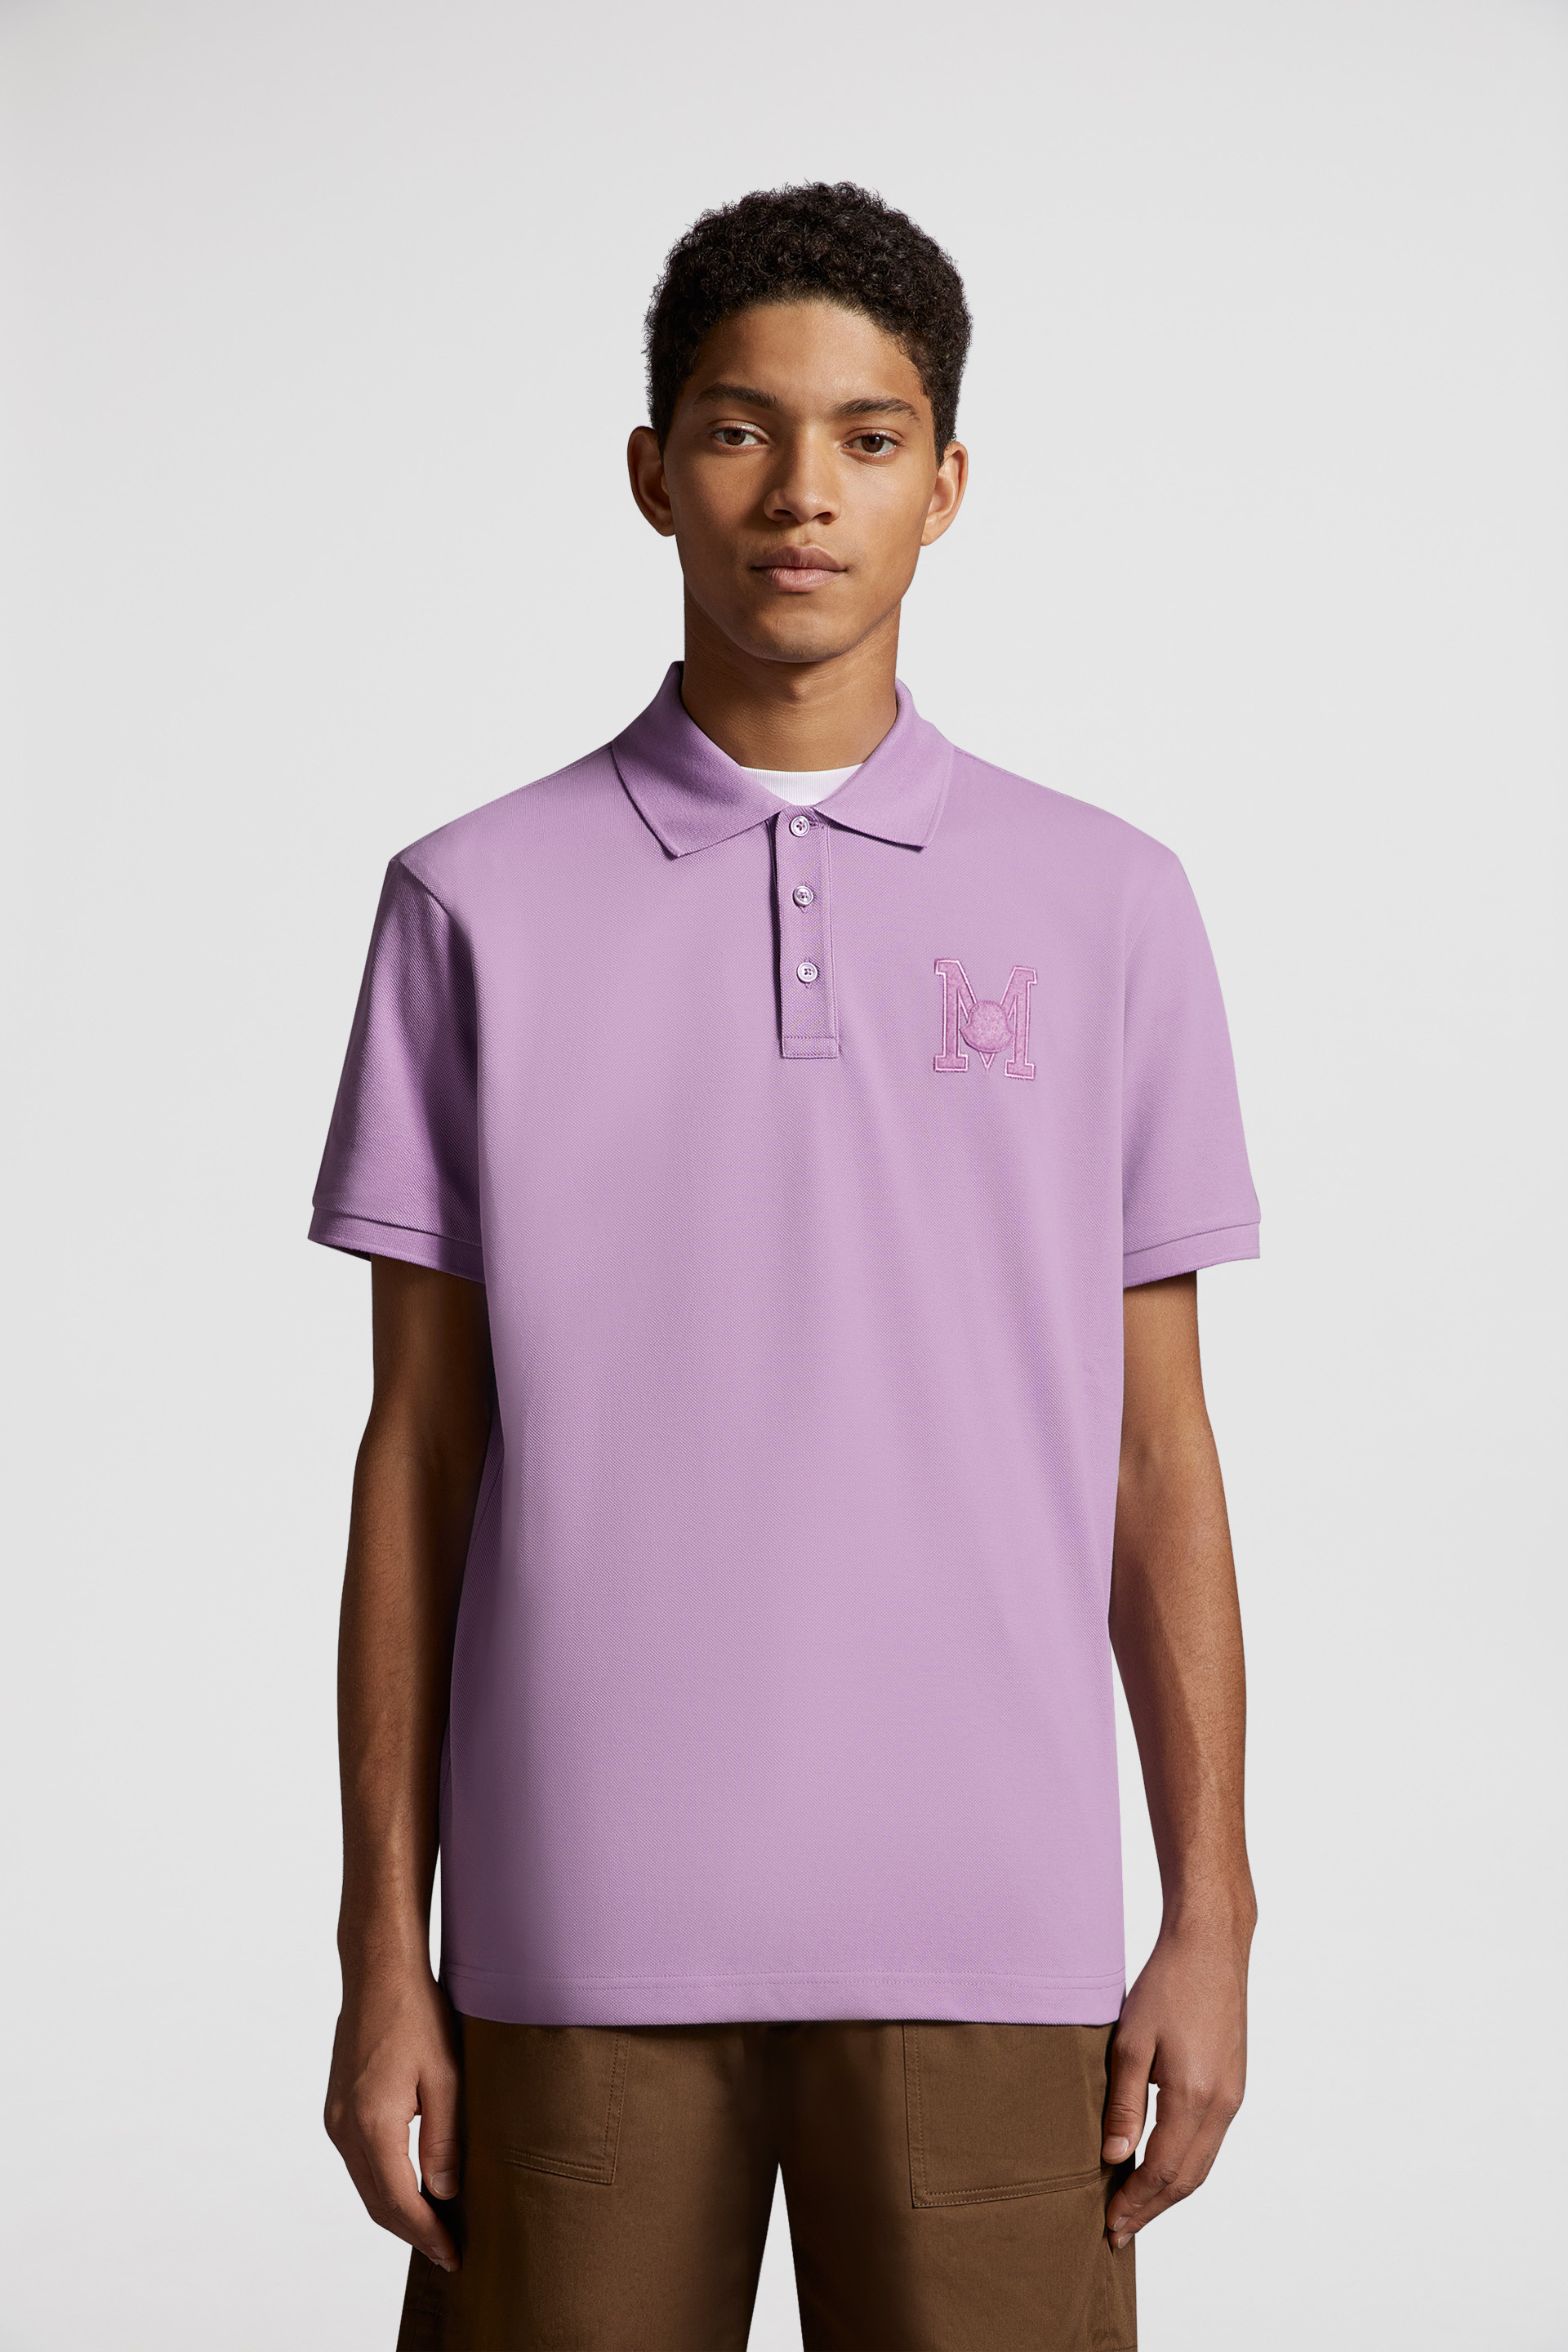 Moncler Men's Embroidered Monogram Polo Shirt Purple - Polo Shirts